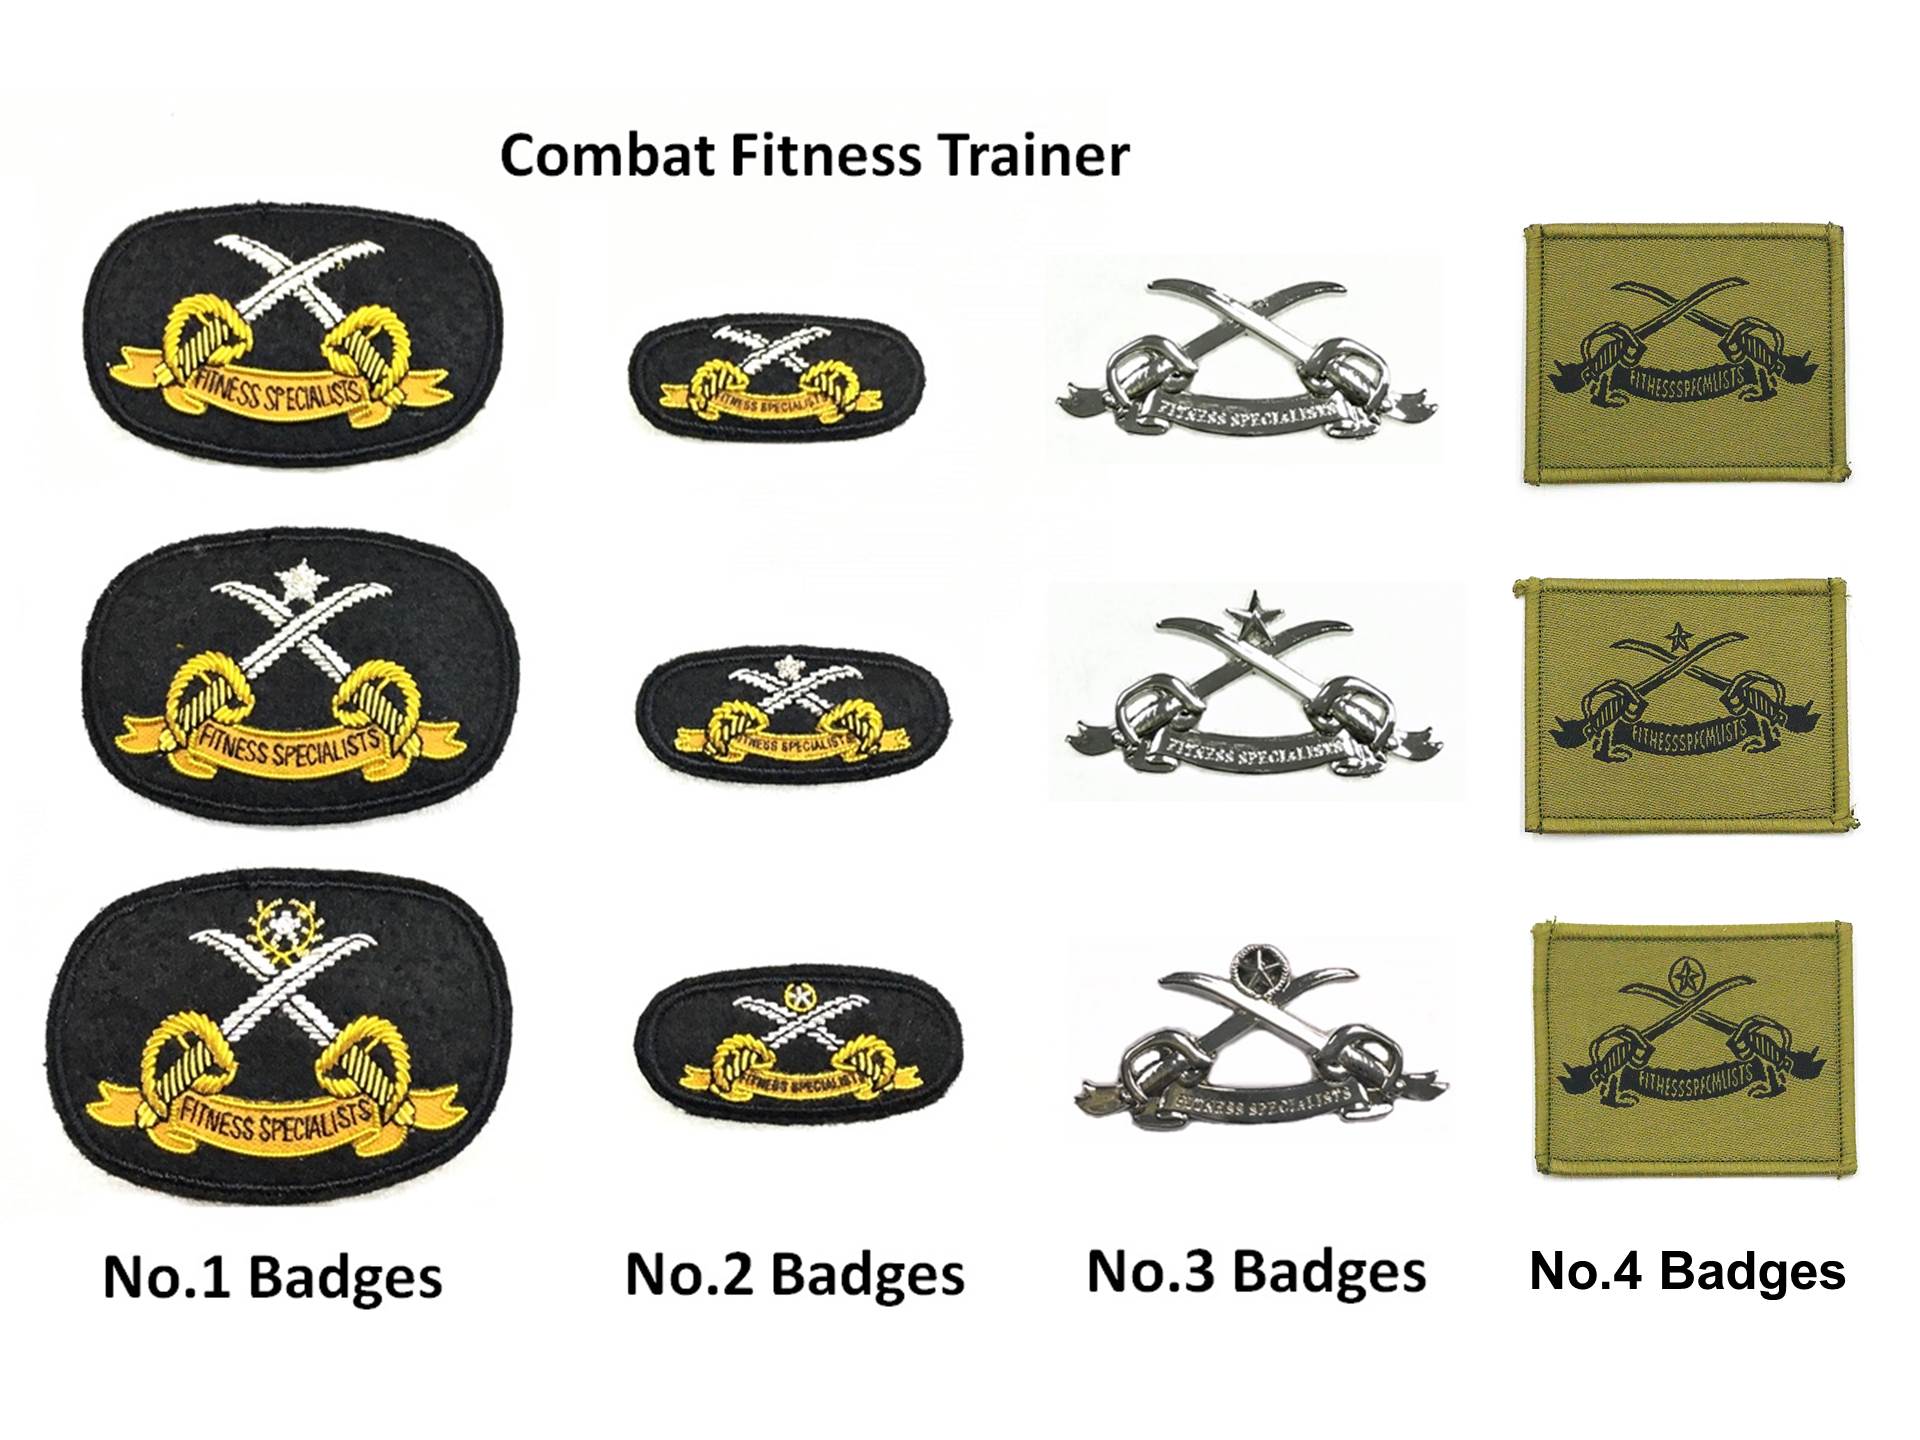 Combat Fitness Trainer Badges